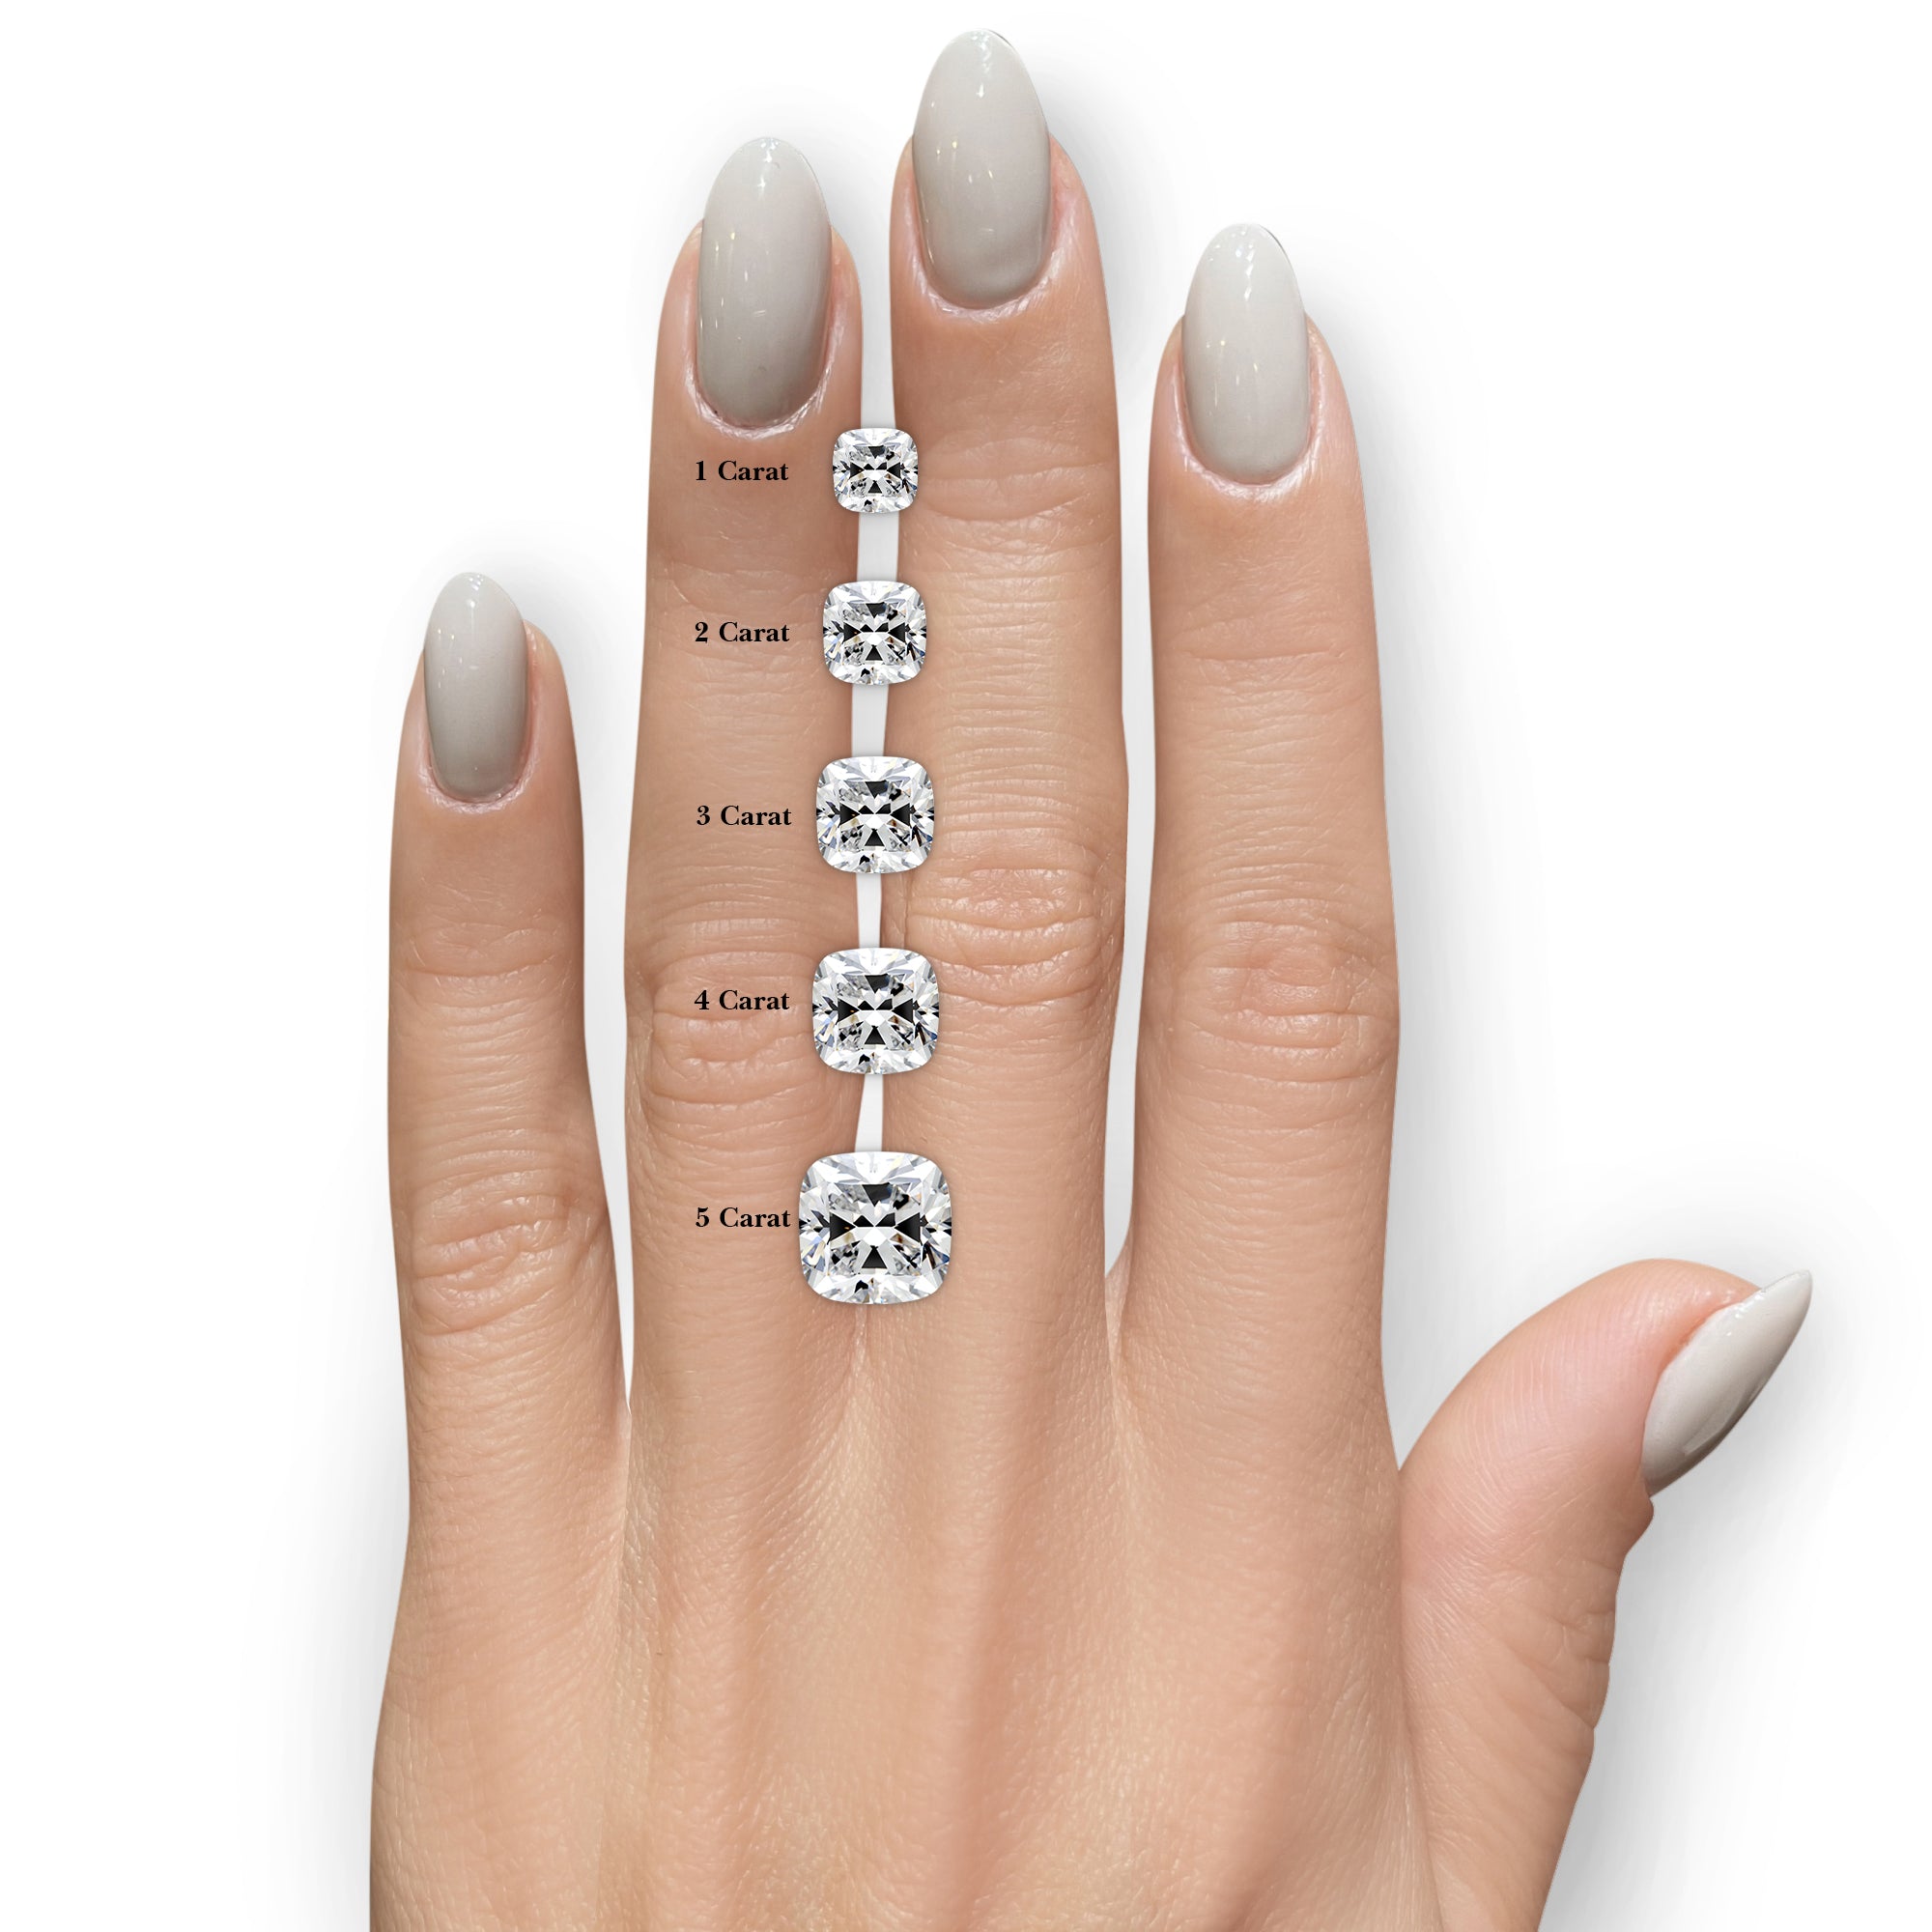 Paula Diamond Engagement Ring   (2.70 Carat) -14K White Gold